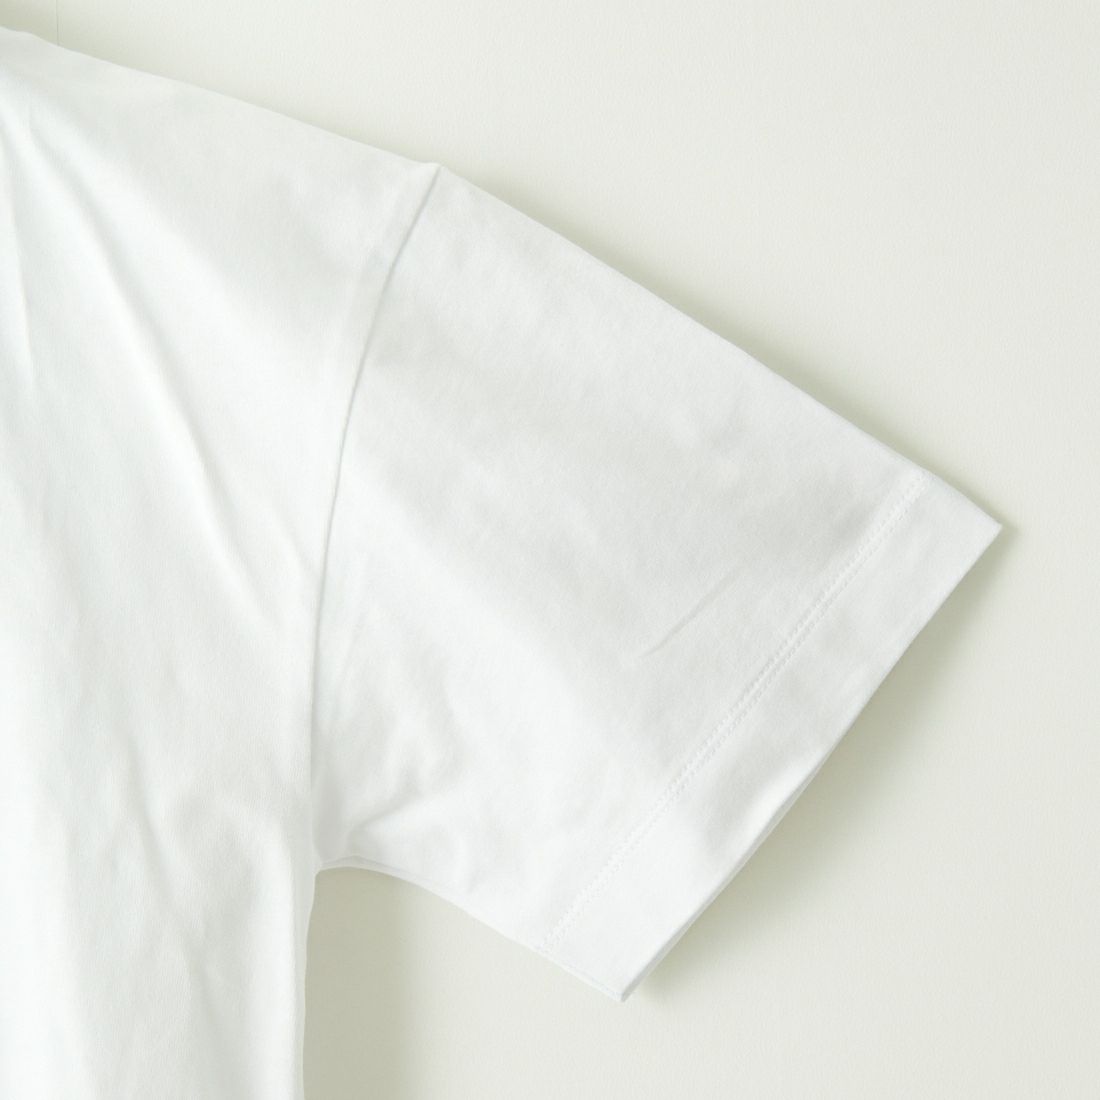 SLICK [スリック] ドロップショルダープリントTシャツ UNITED [5255852] 900 WHITE